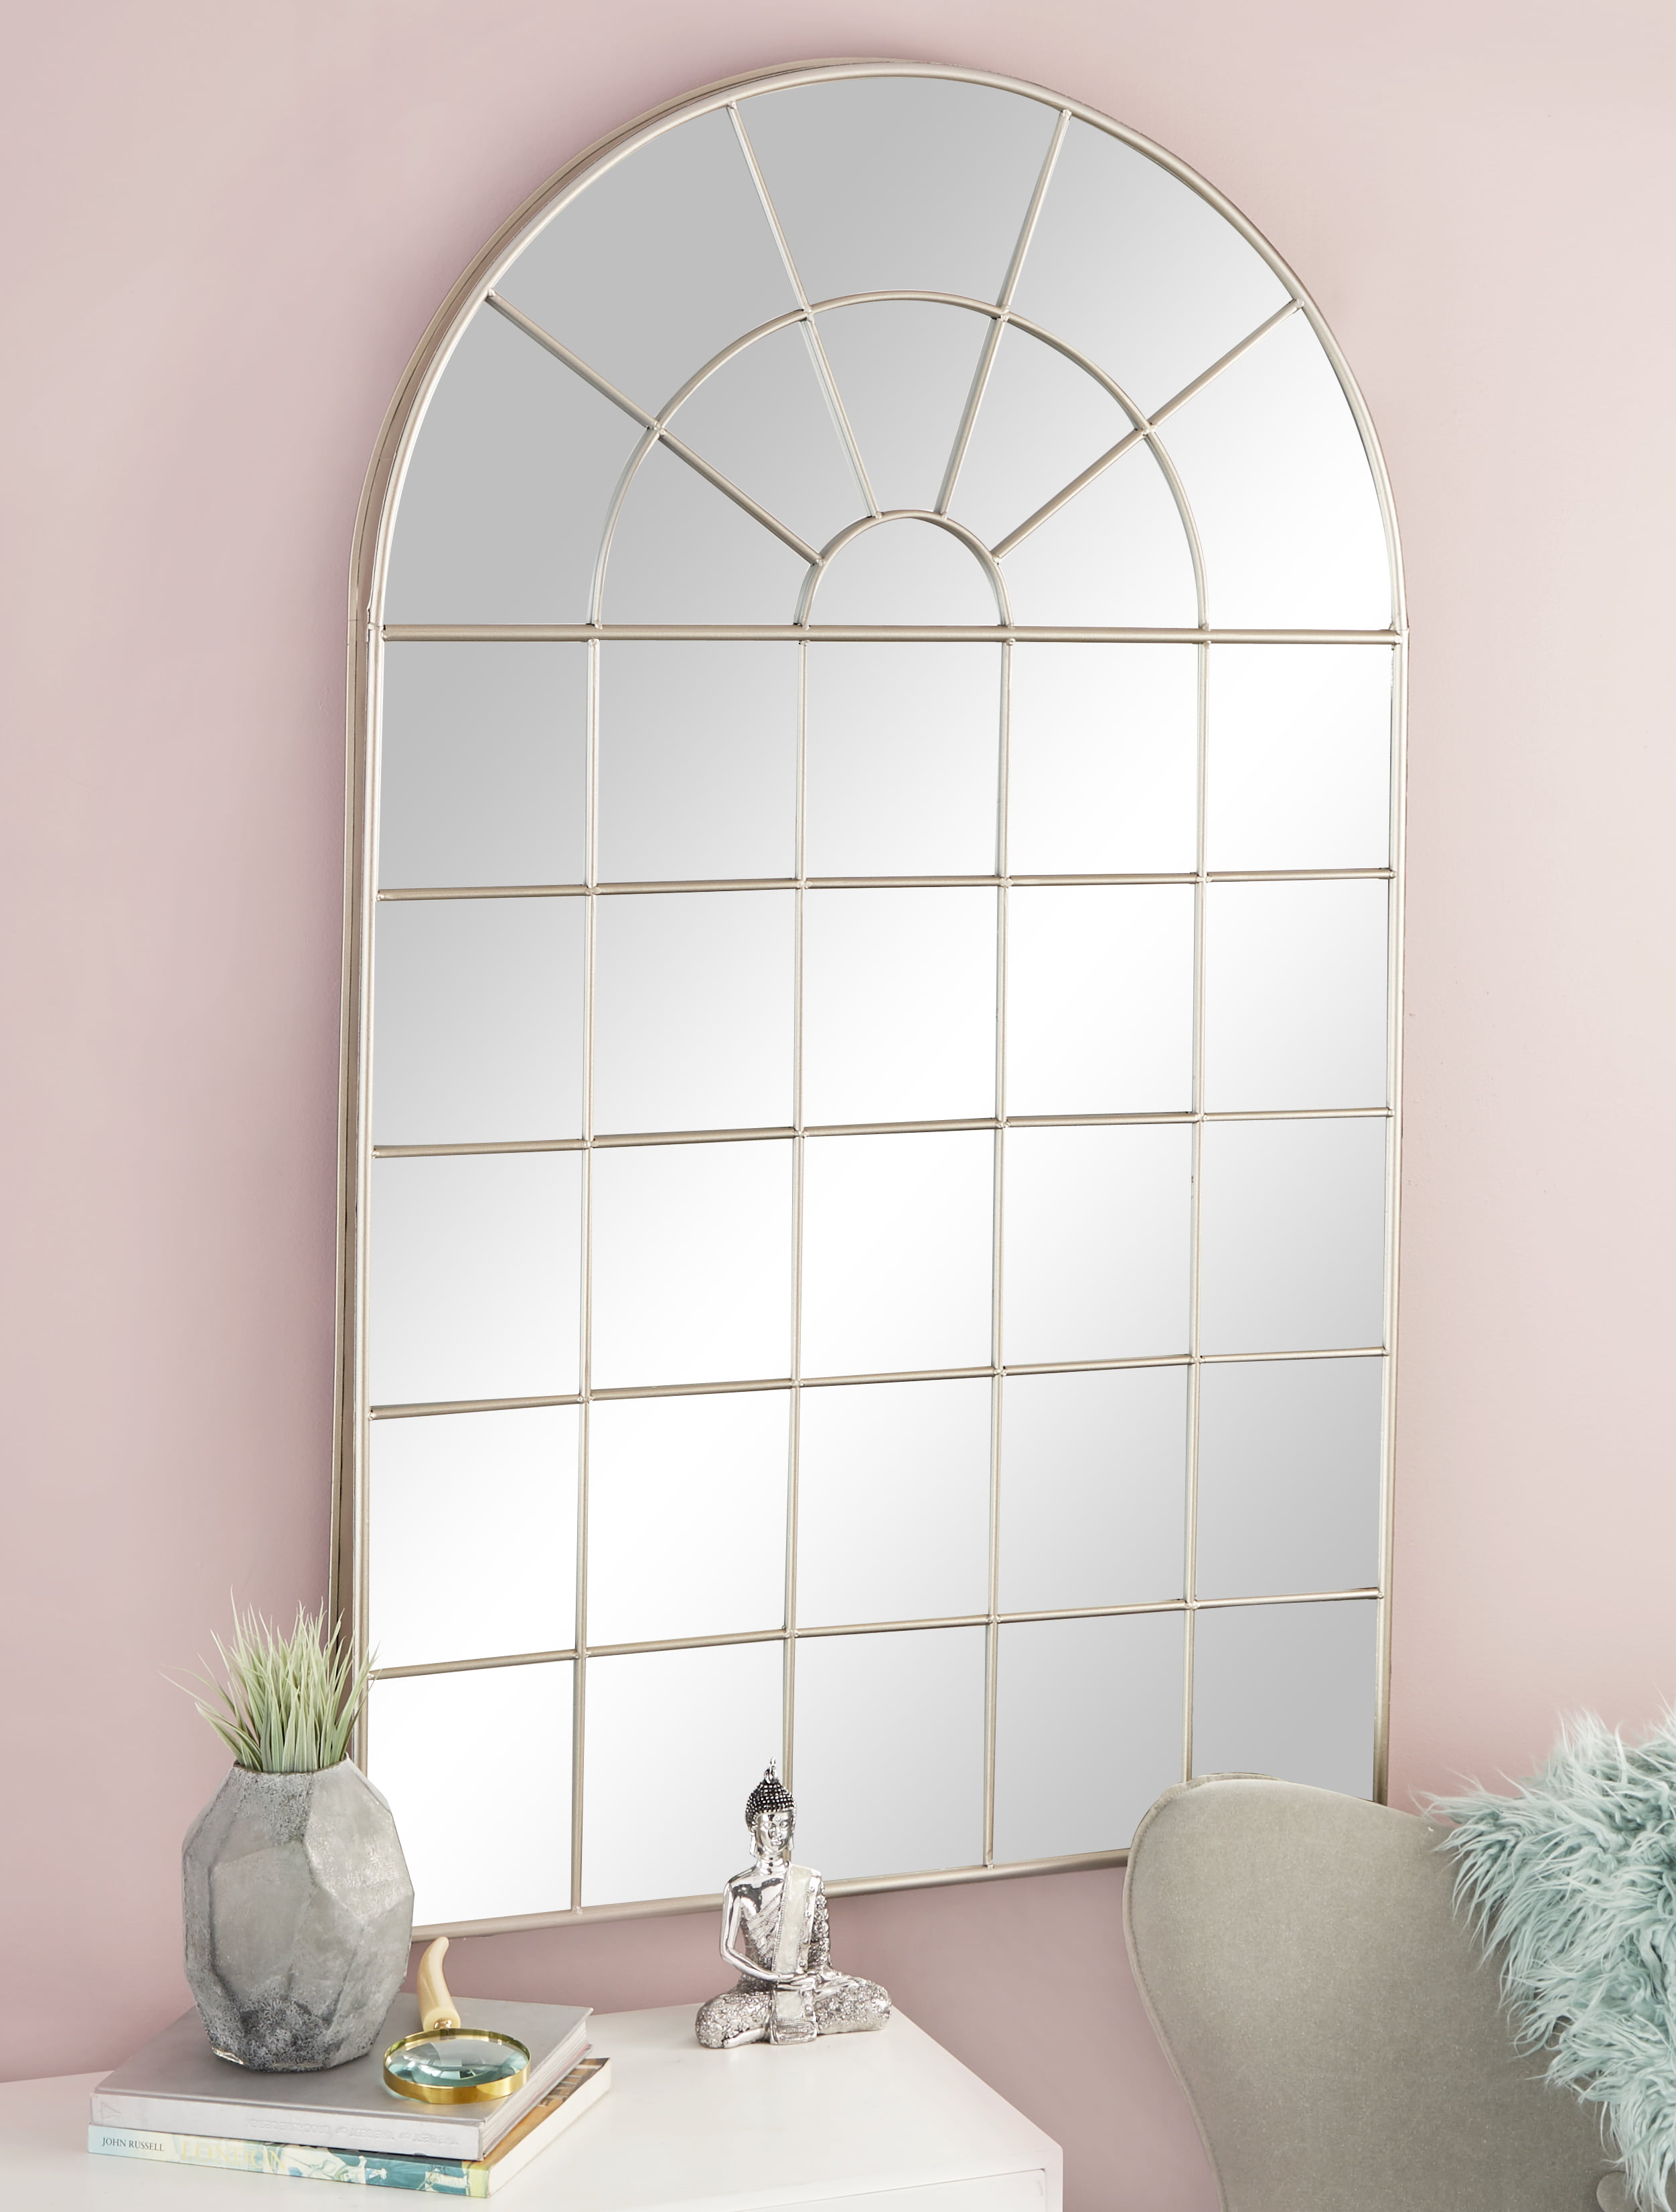 whitewashed window pane mirror